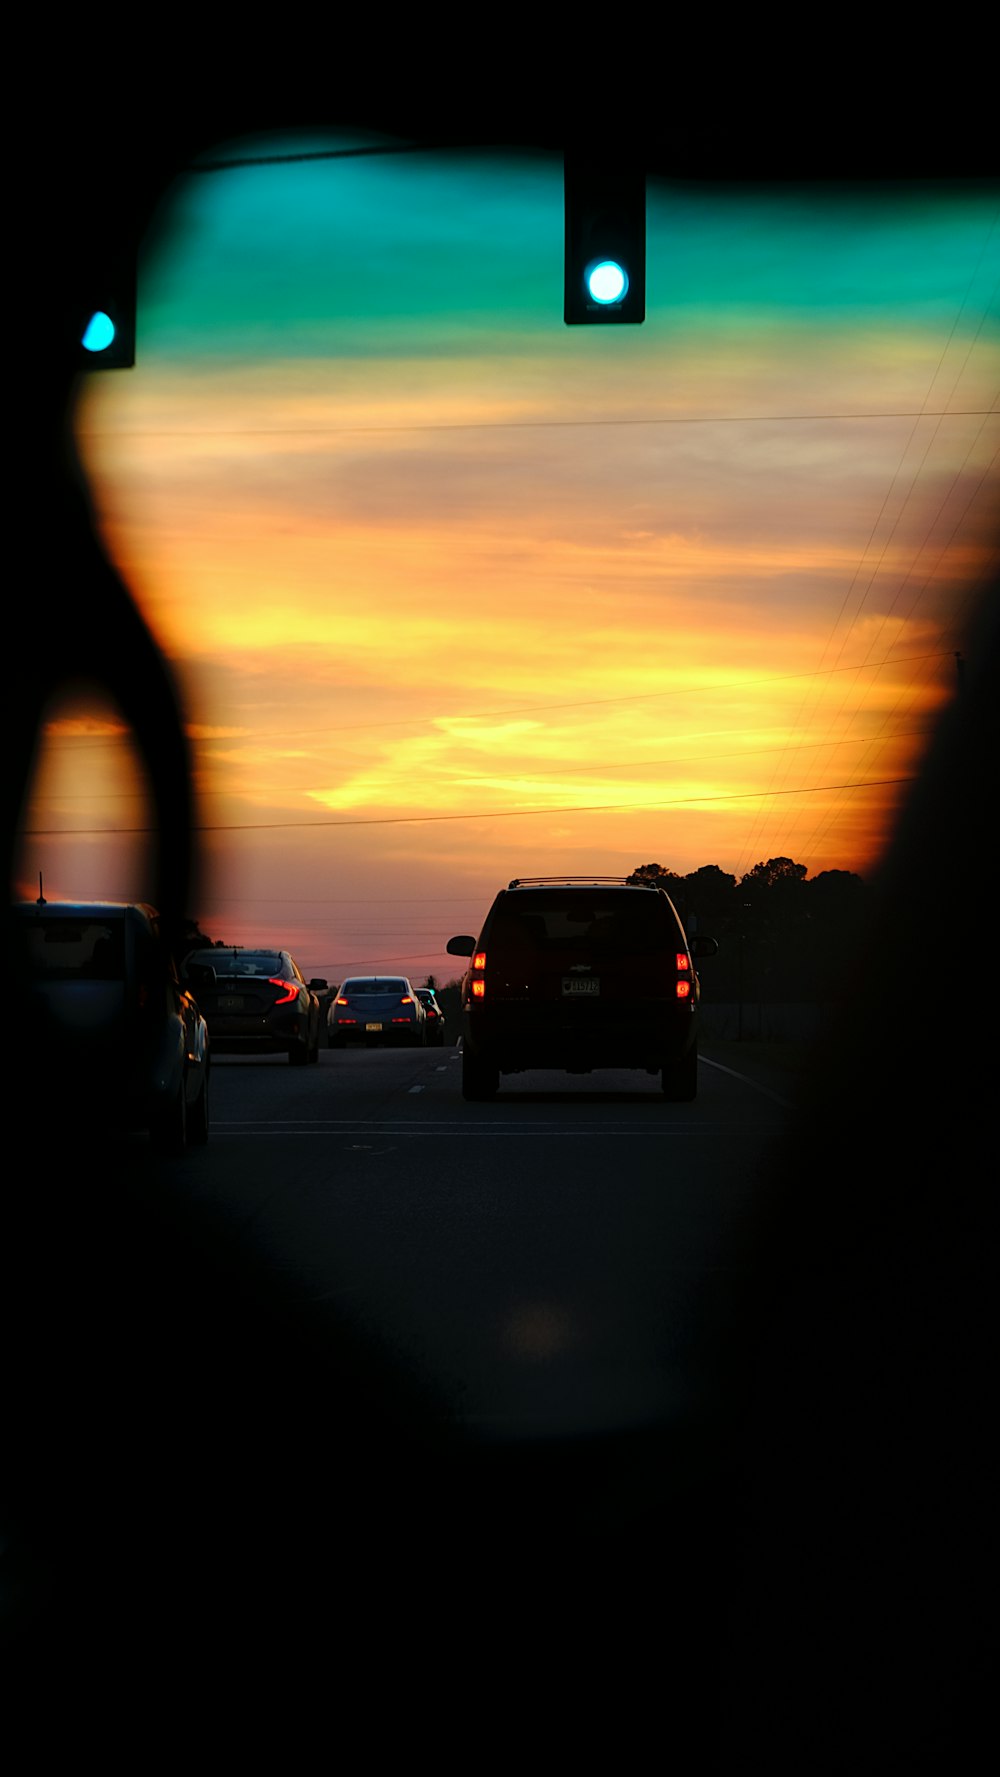 Una puesta de sol vista a través del espejo retrovisor de un coche